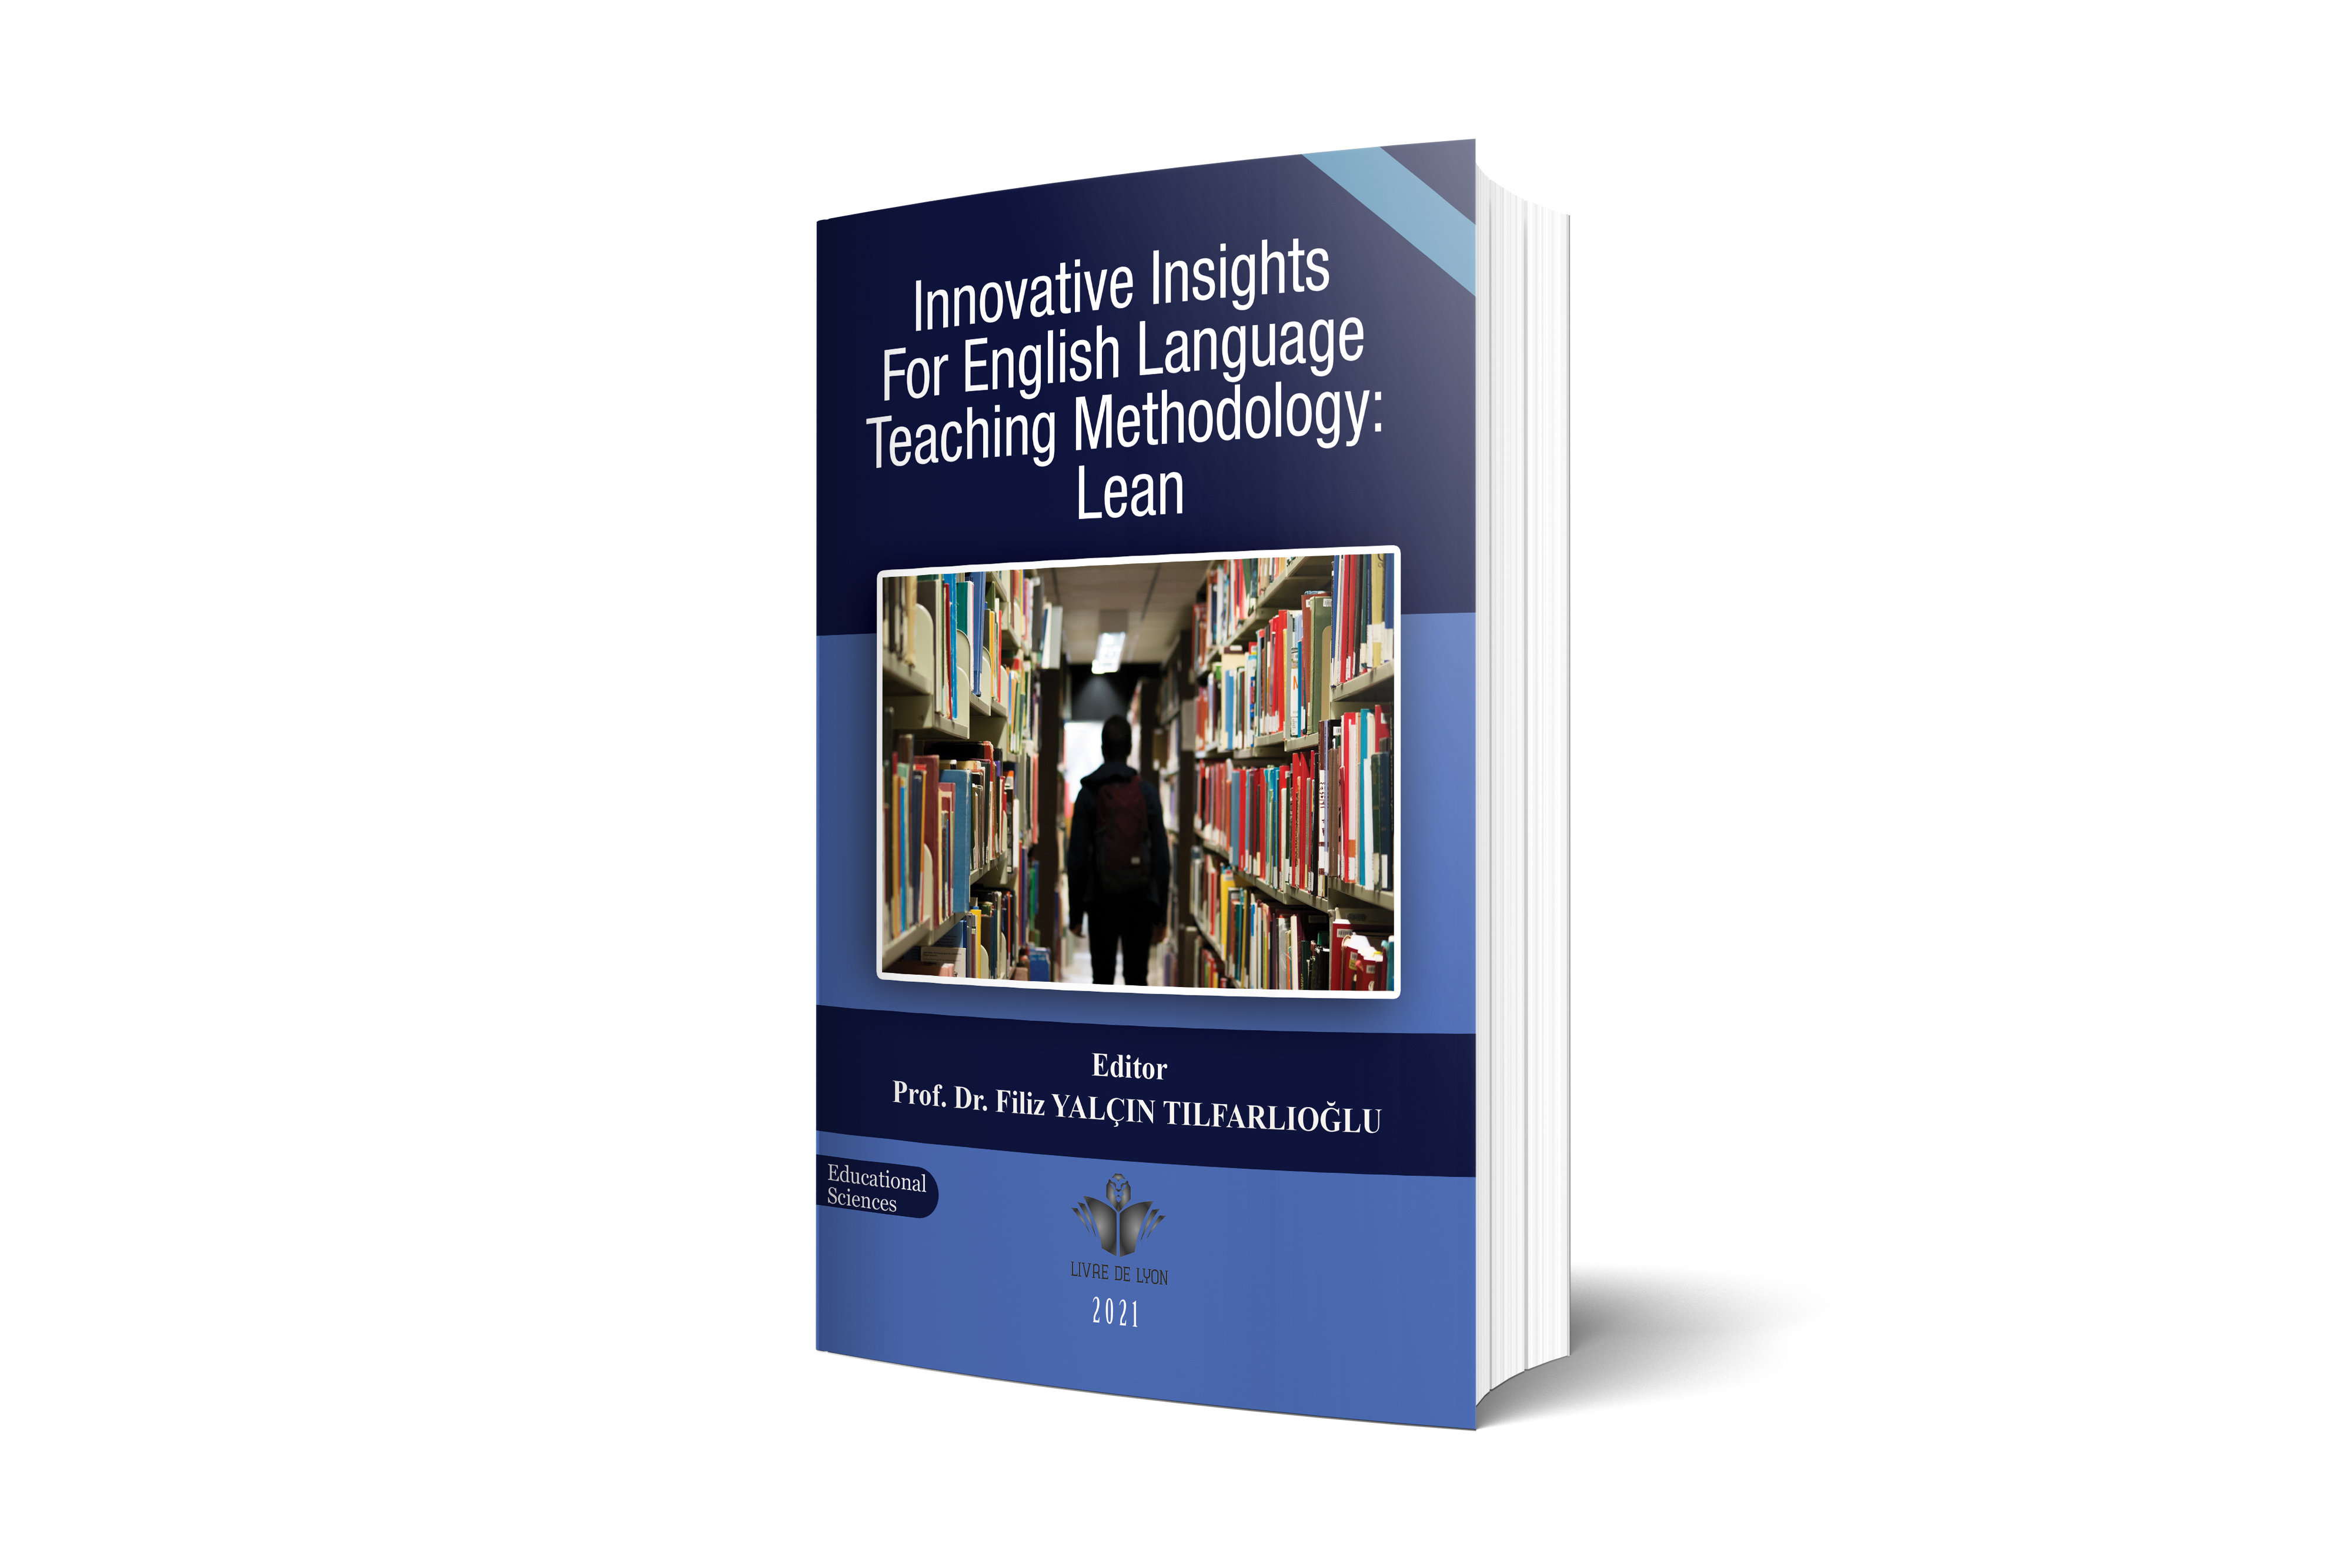 Innovative Insights for English Language Teaching Methodology: Lean